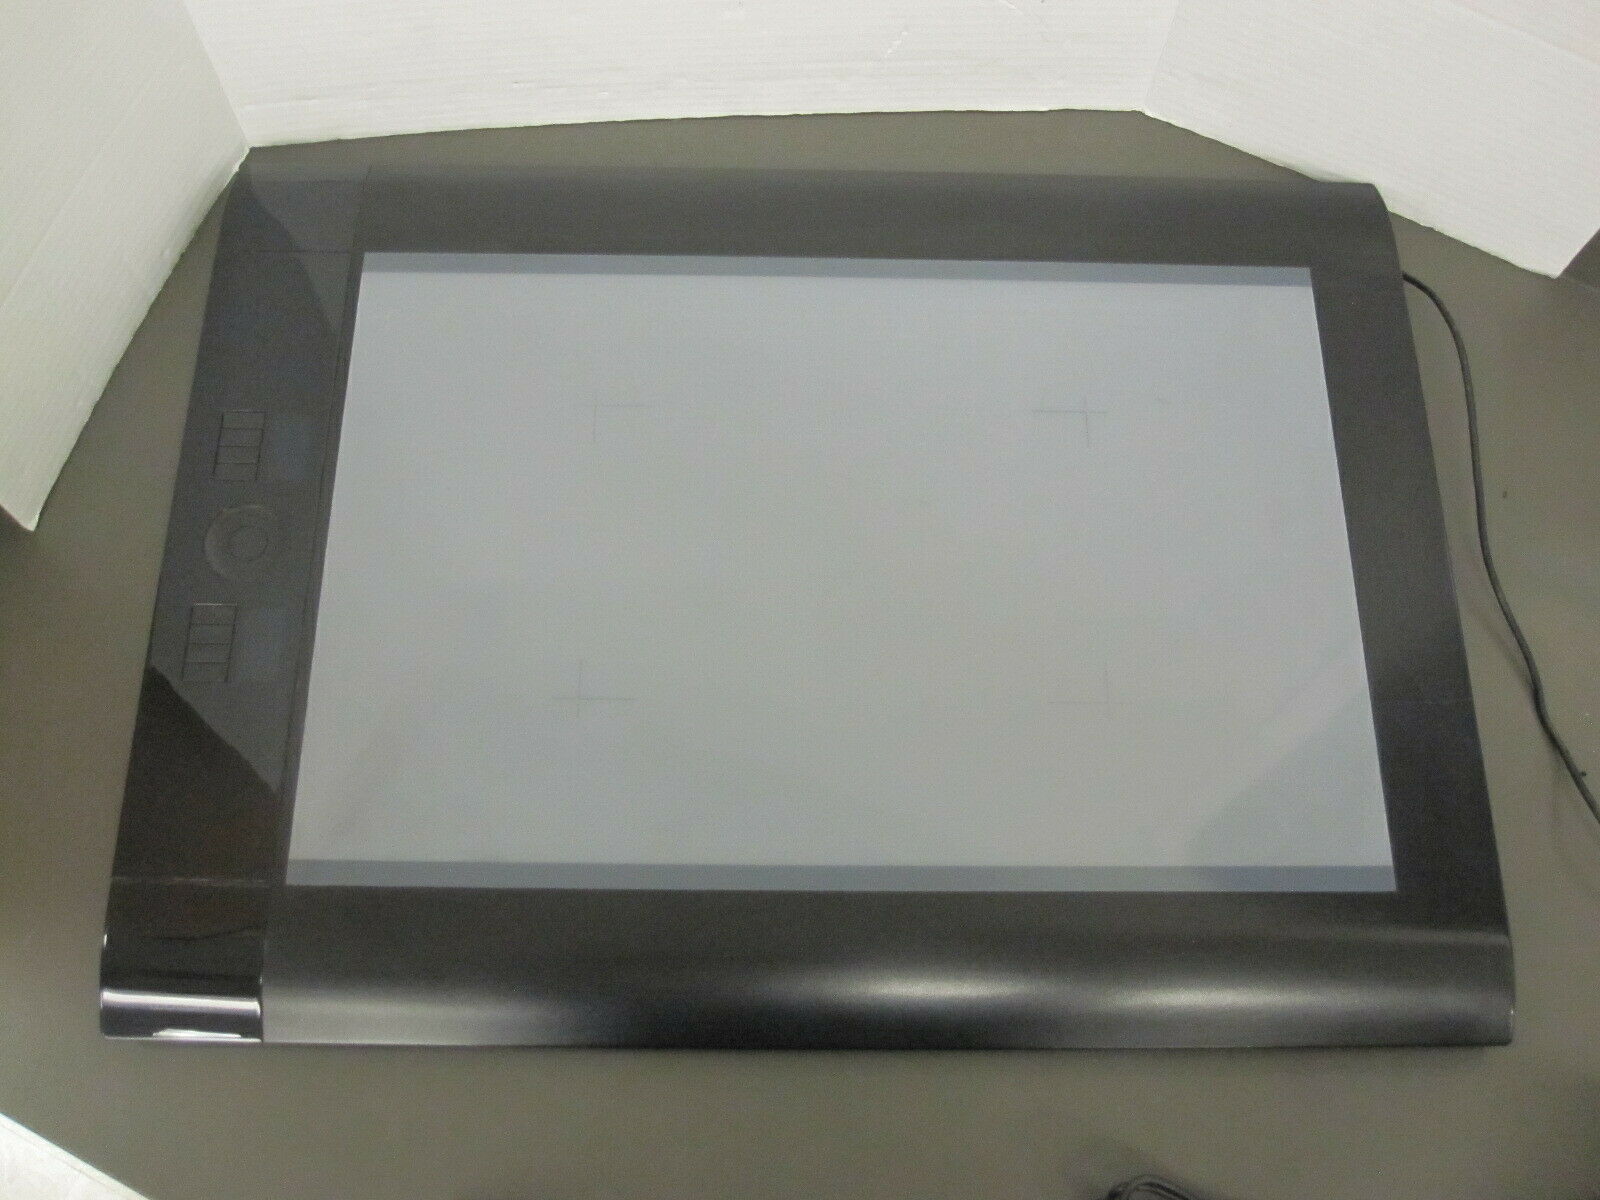 Wacom Intuos 4 XL Graphics / Drawing Tablet (PTK-1240) Manufacturer Refurbished